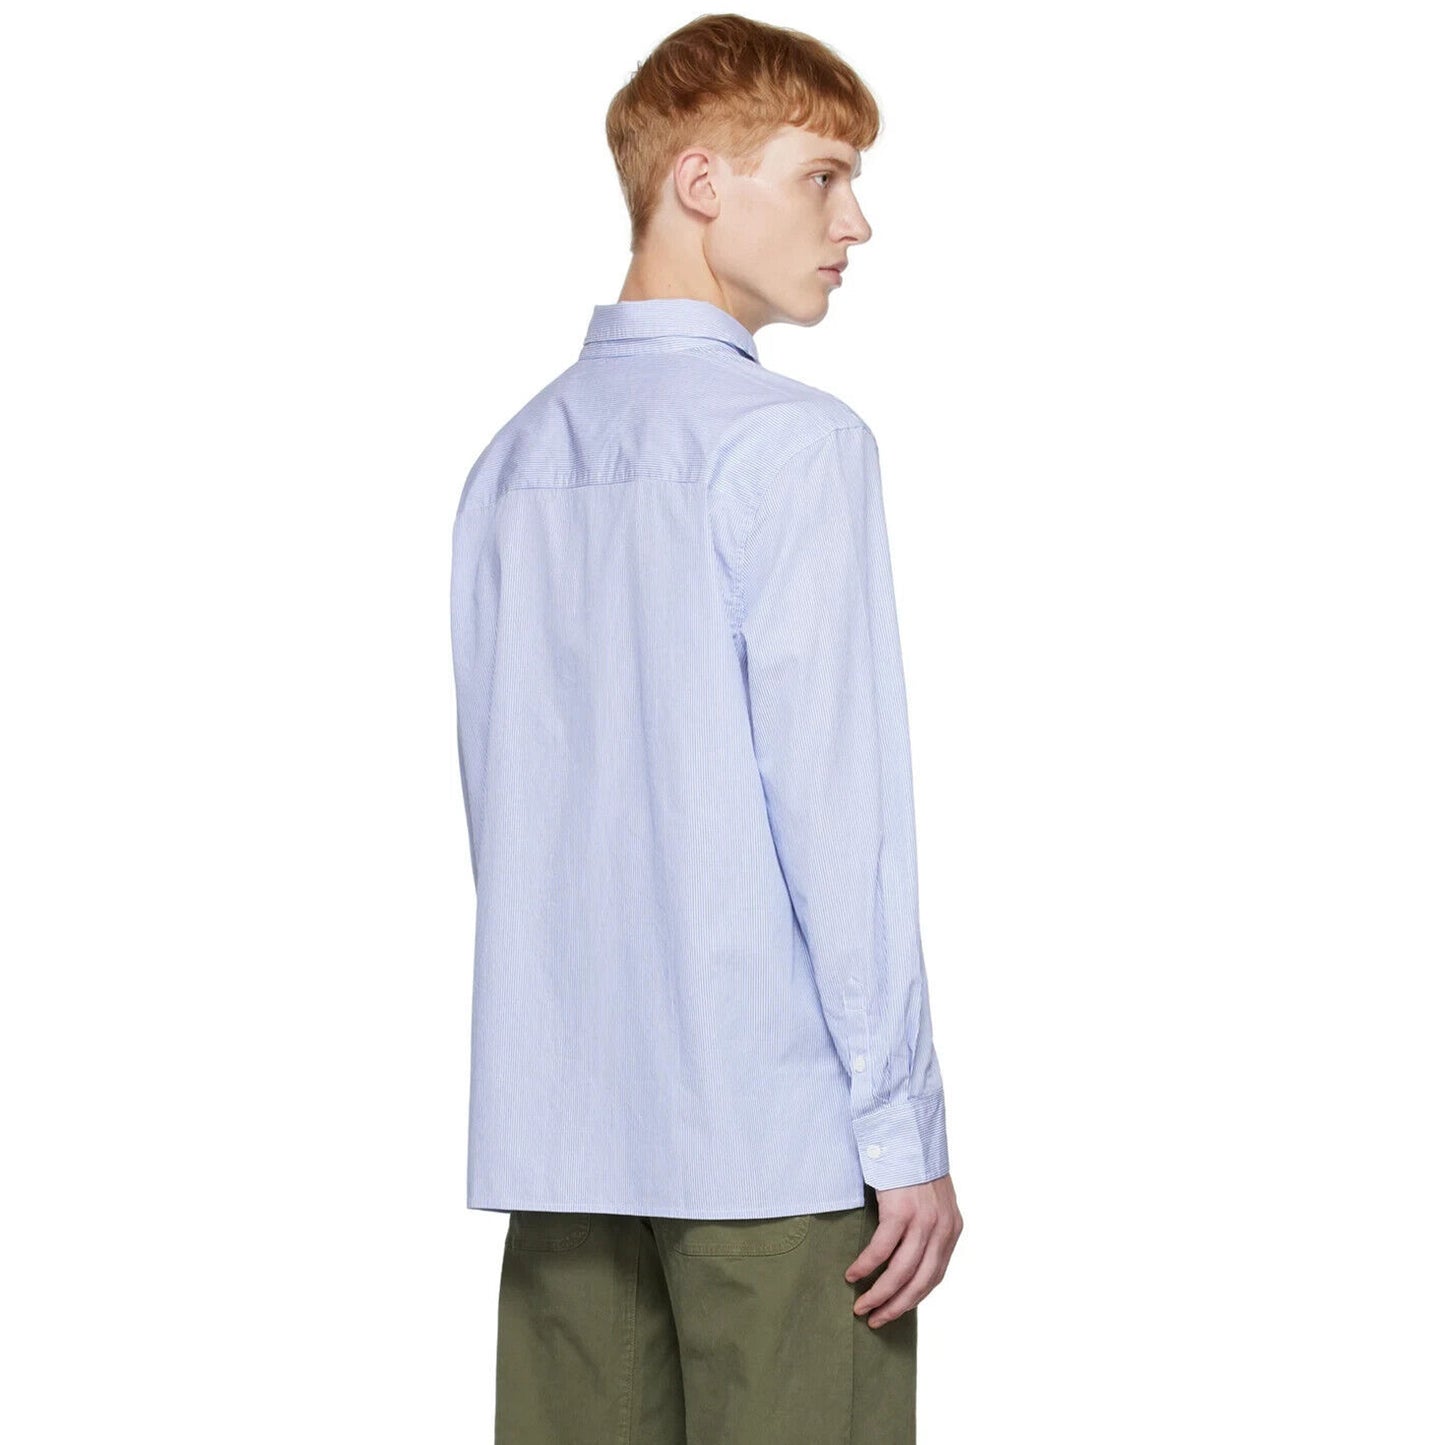 Nili Lotan Men's Finn Shirt Long Sleeve Buttondown